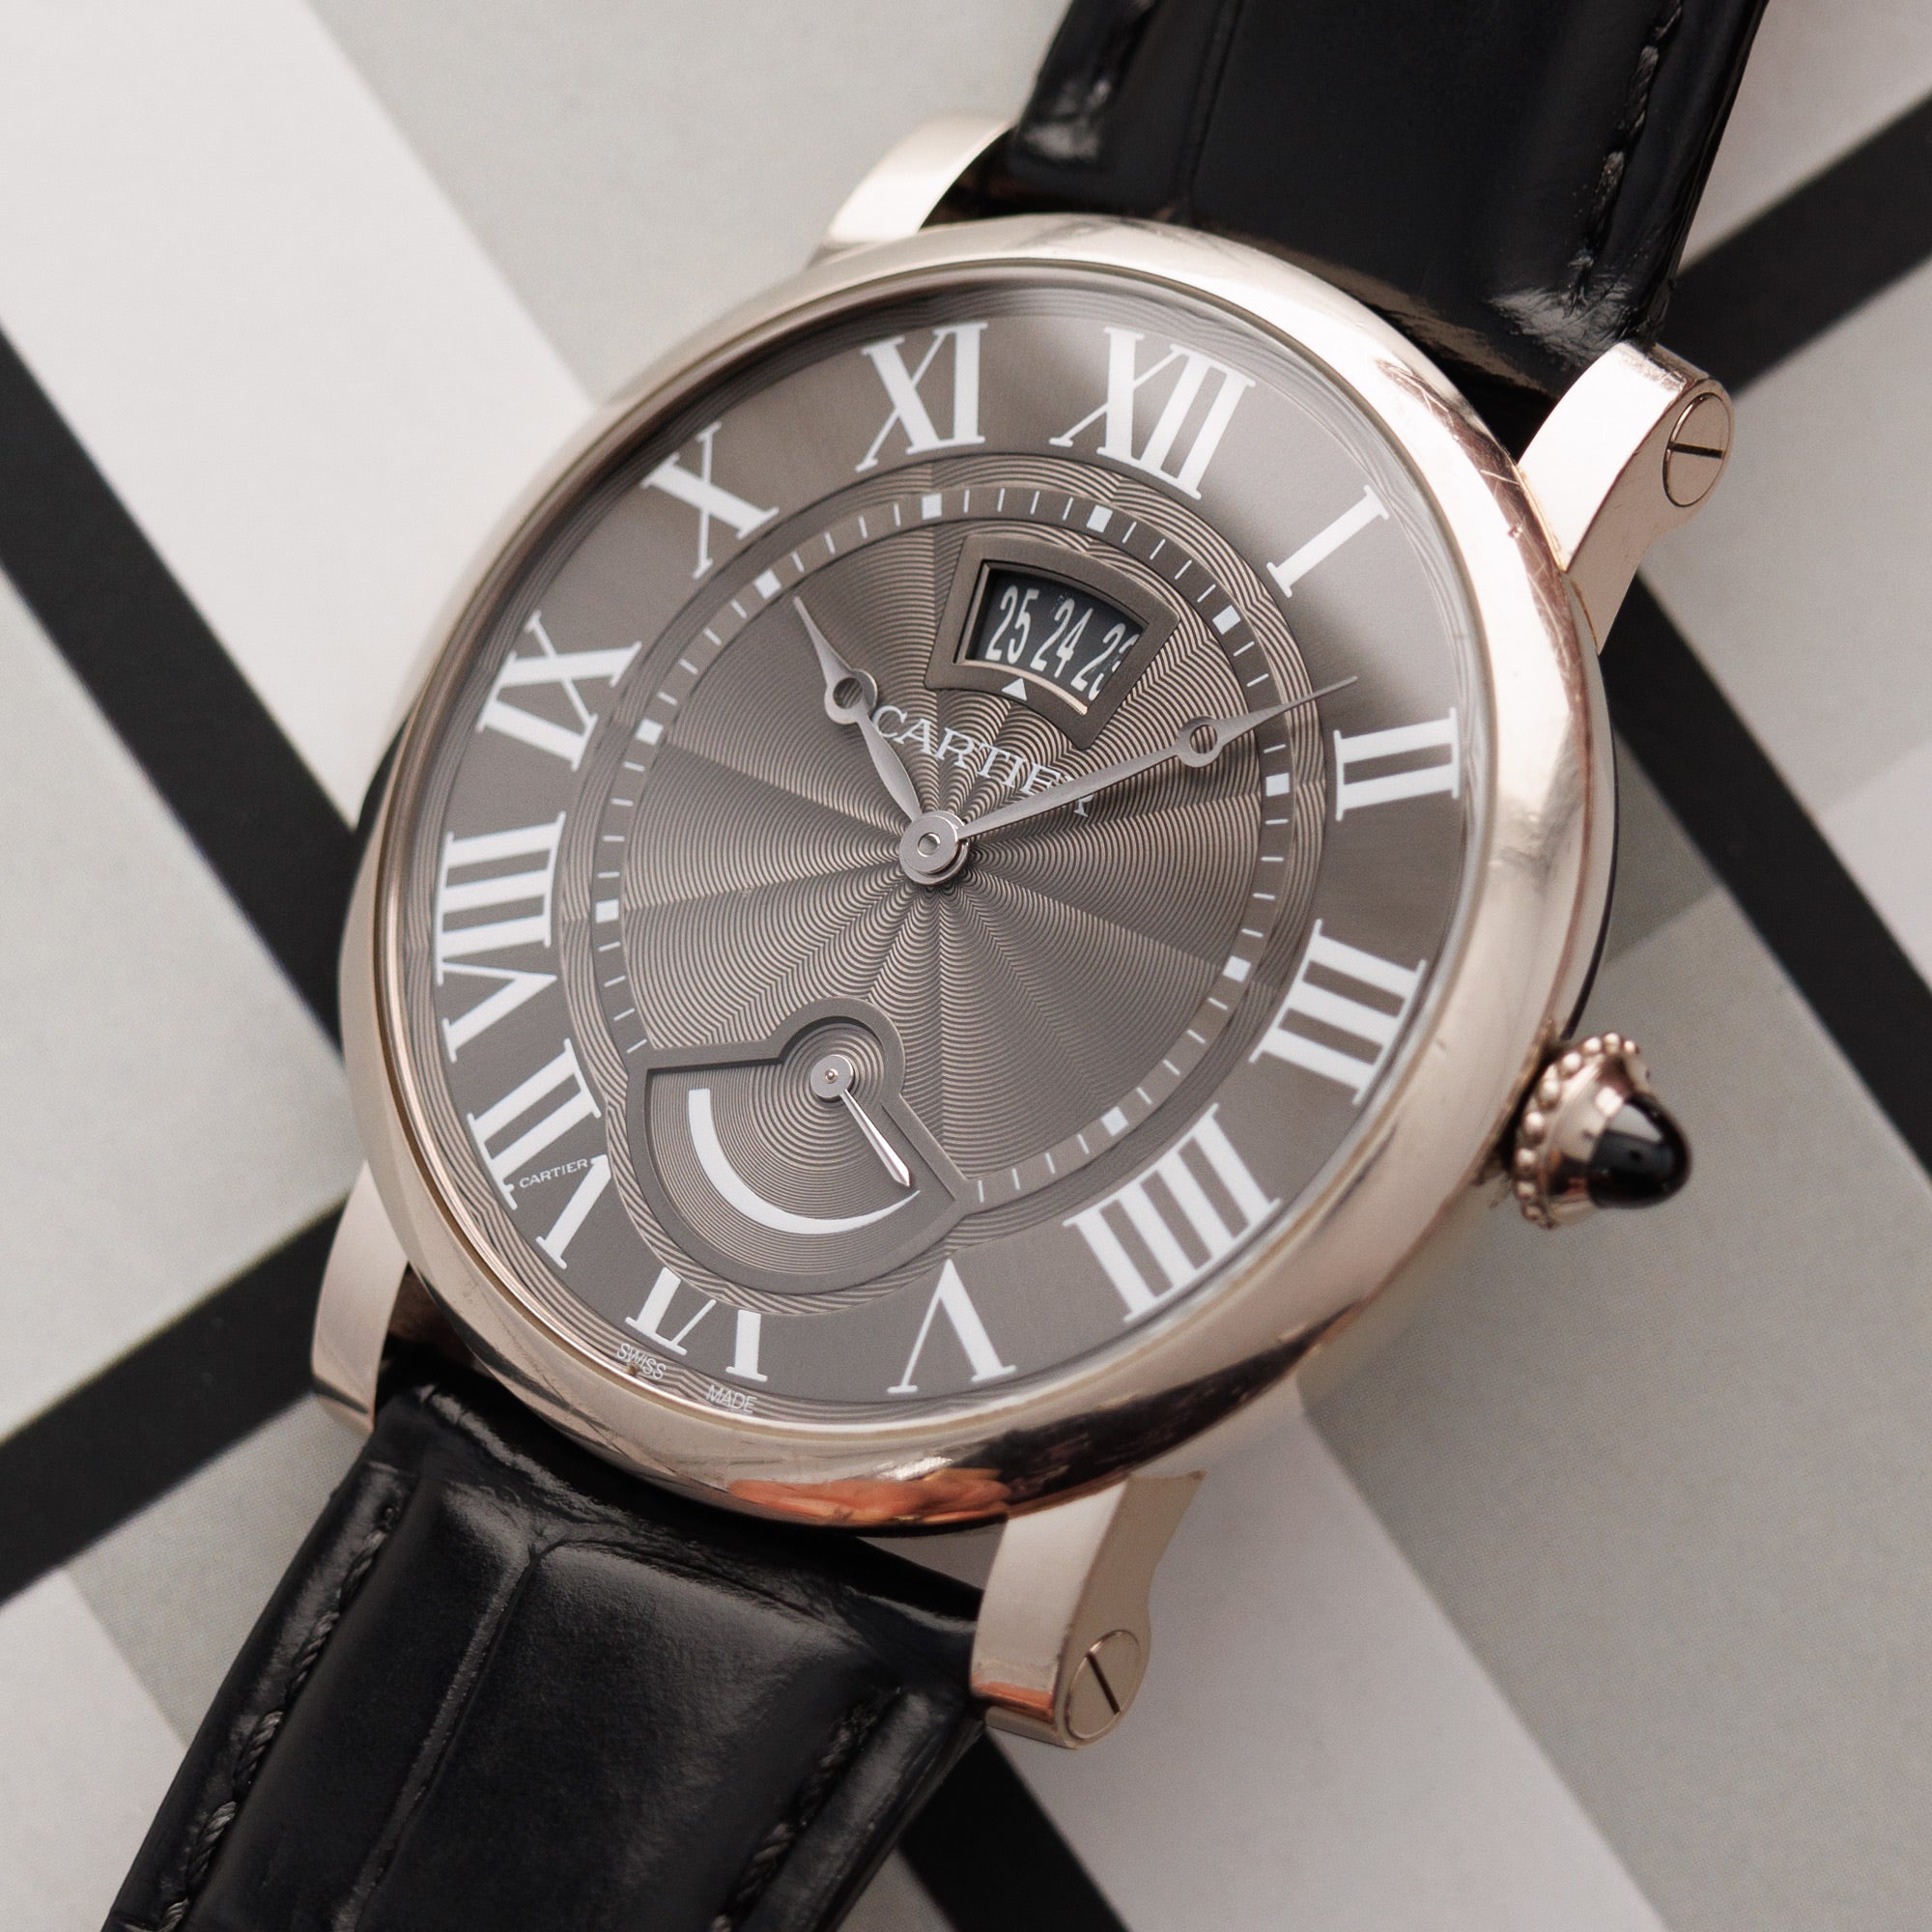 Cartier - Cartier White Gold Rotonde de Cartier Ref. W1556253 - The Keystone Watches